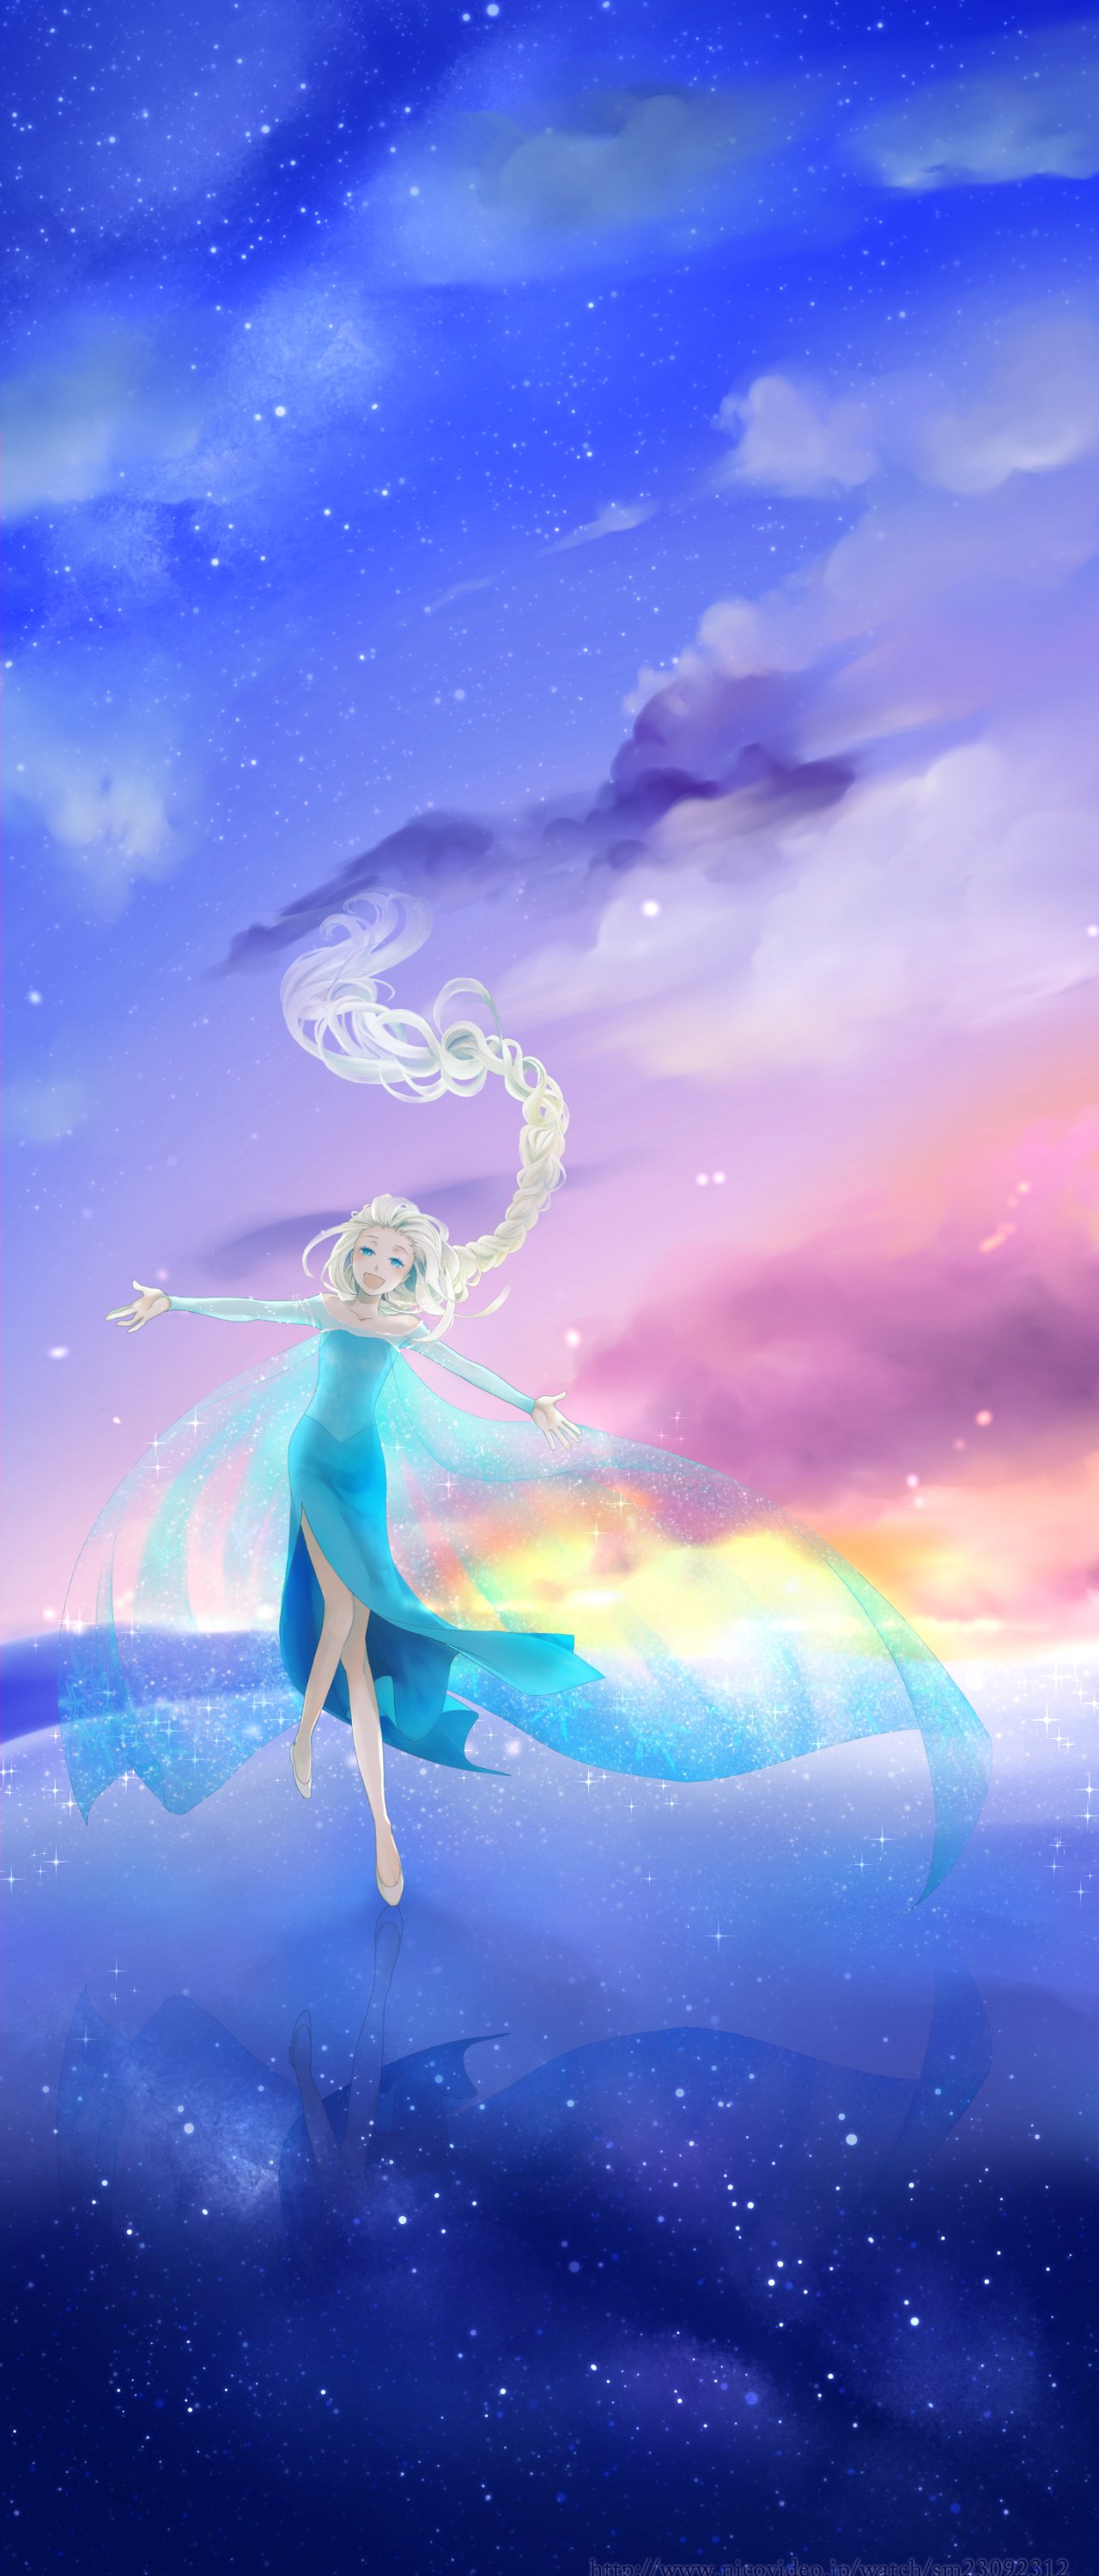 Princess Elsa Cartoon Frozen Movie Fan Art Wallpapers Hd Desktop And Mobile Backgrounds